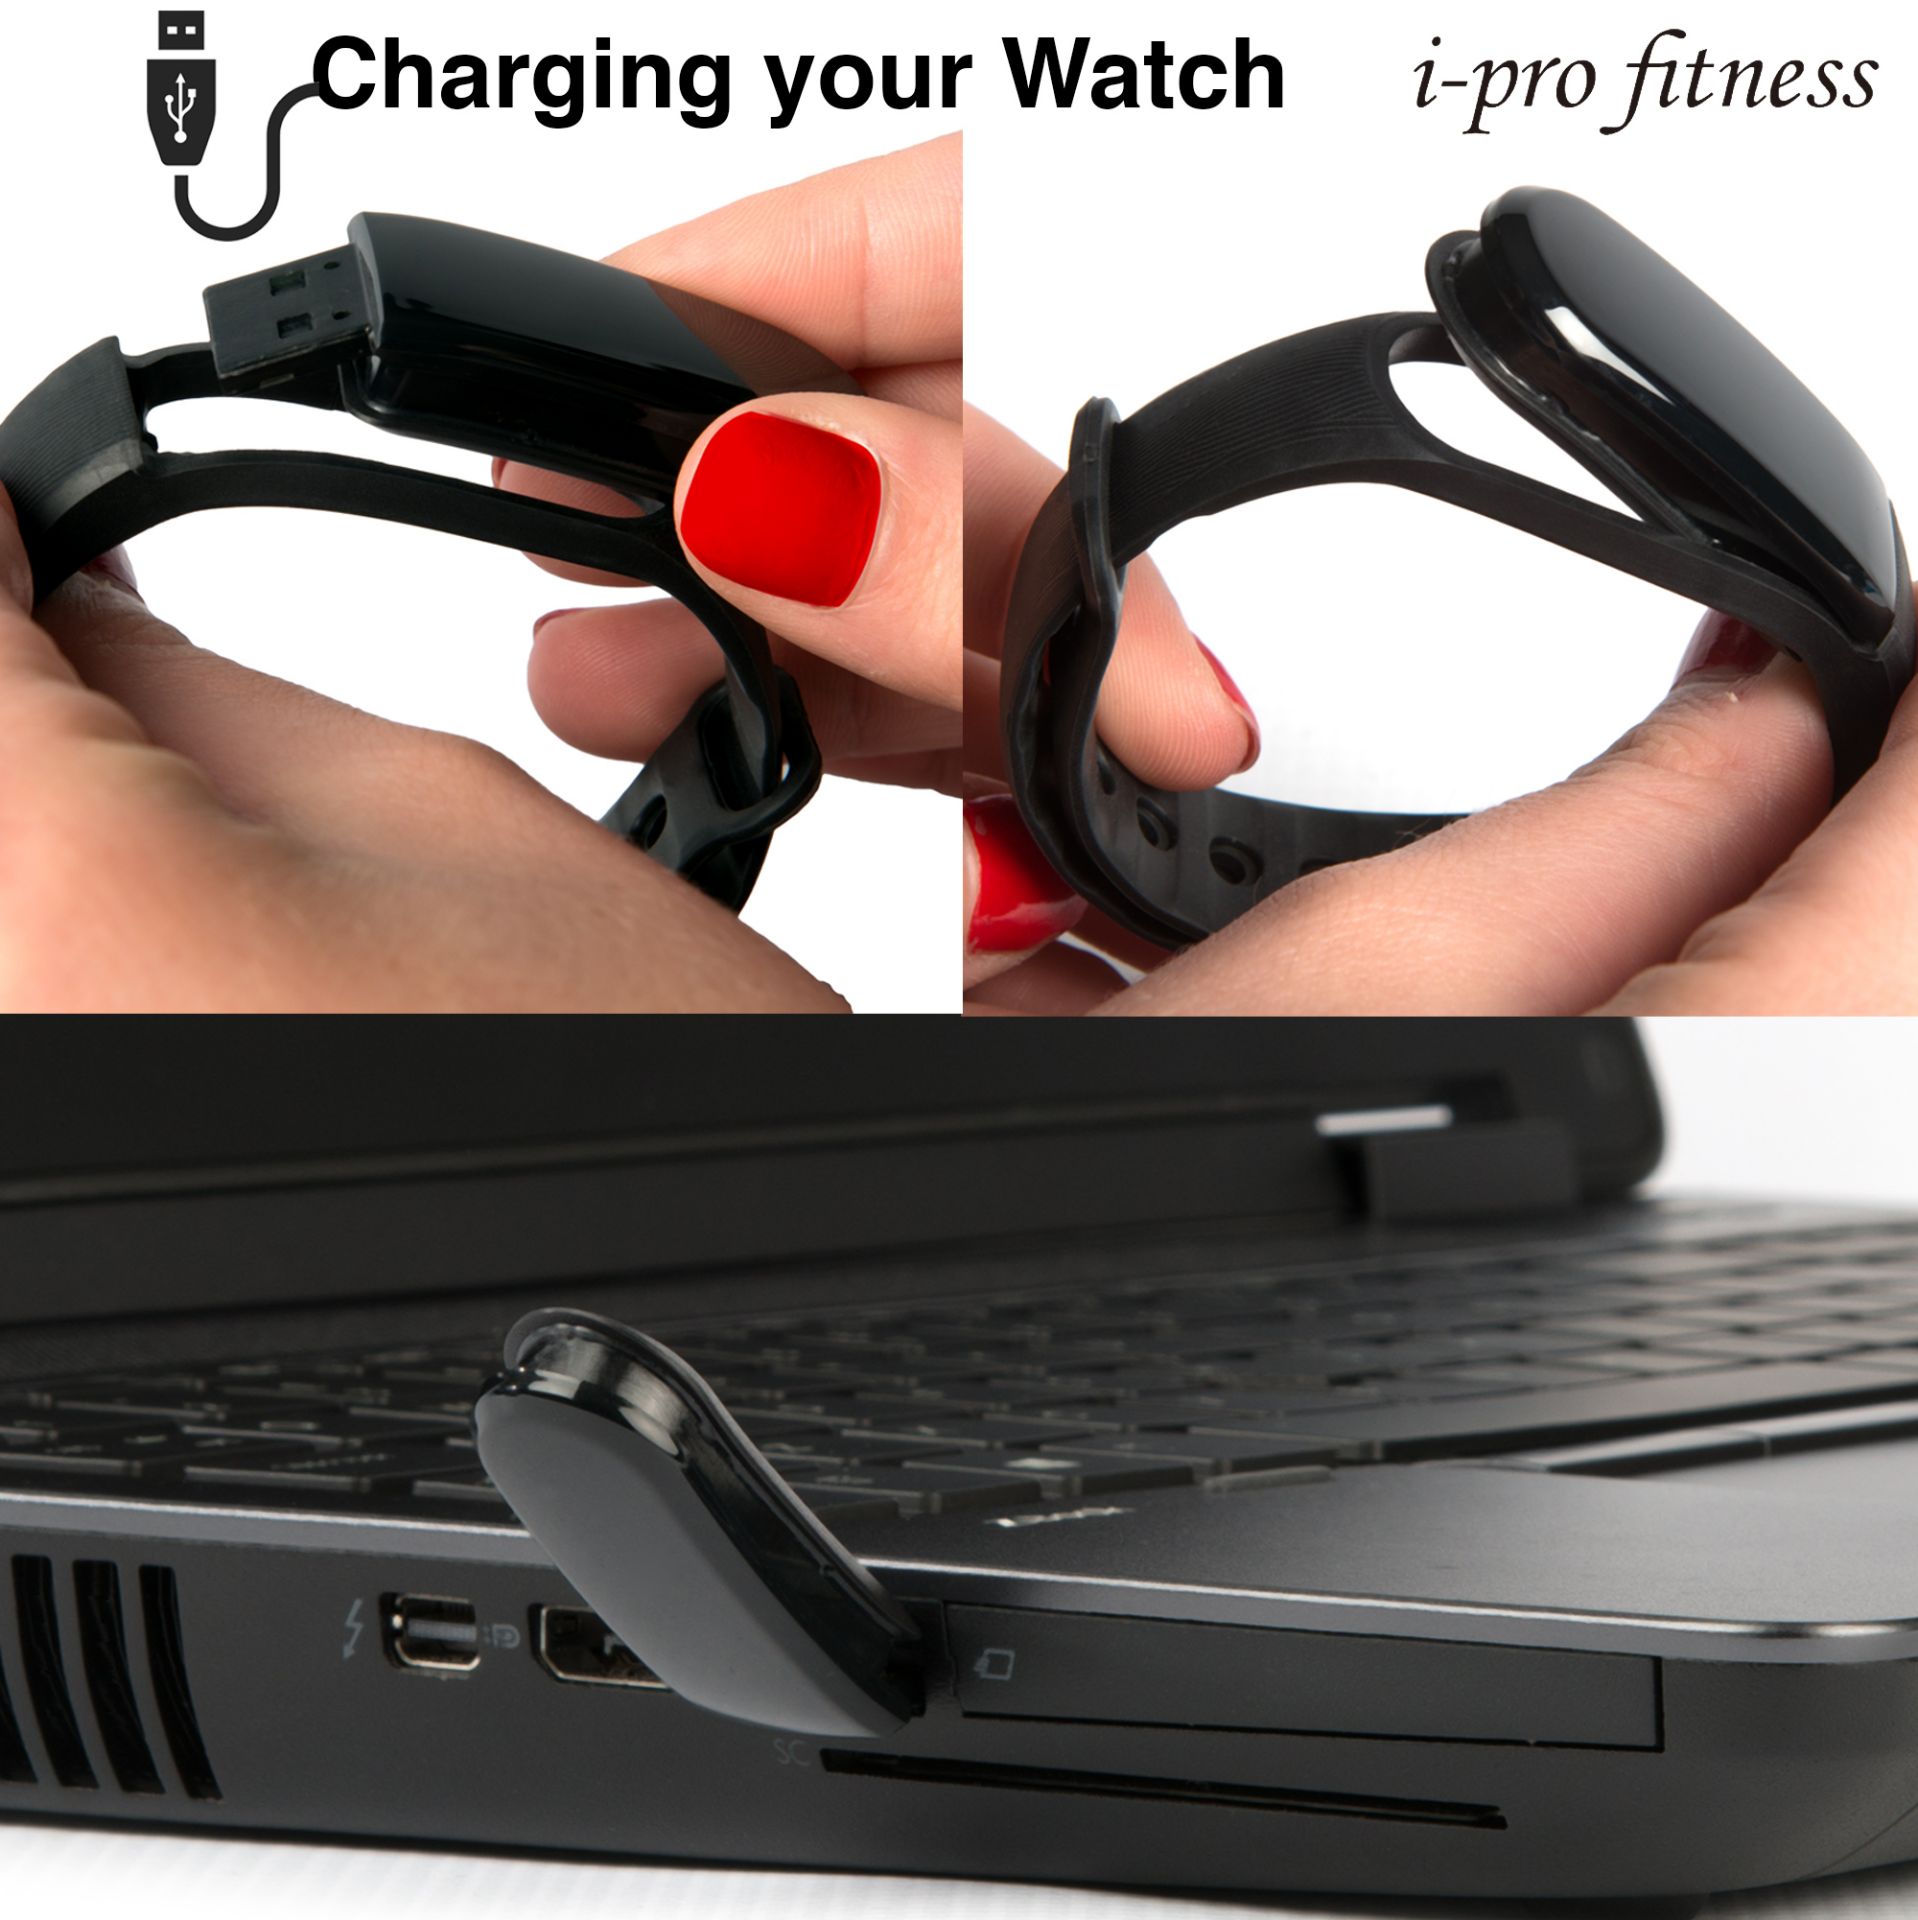 I-Pro Id101 Fitness Tracker - Image 2 of 5